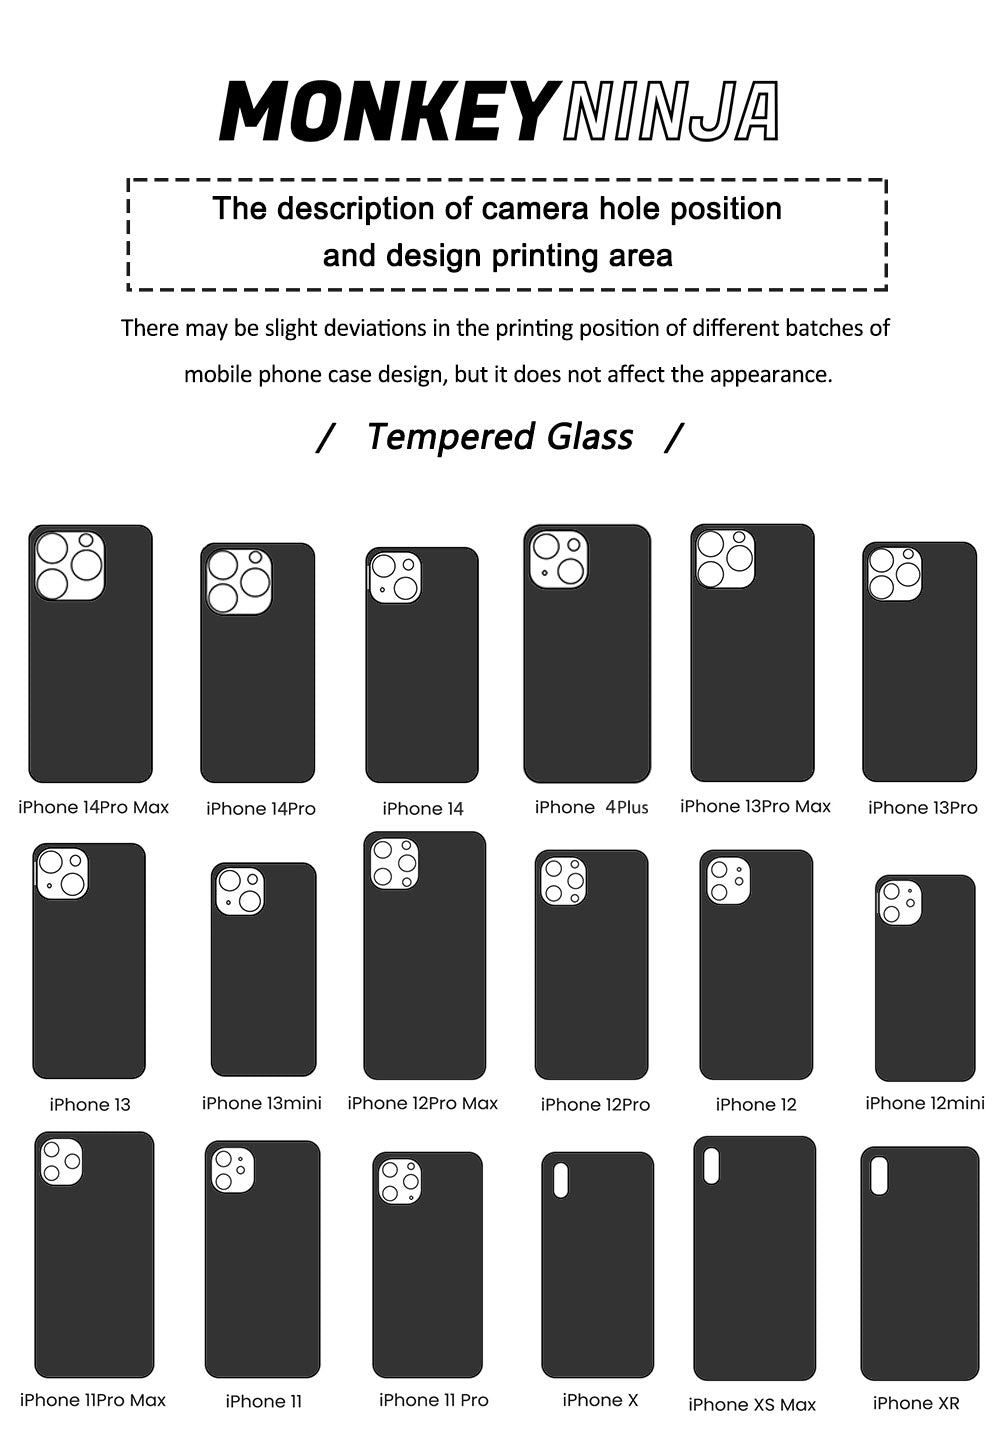 Fullmetal Alchemist Graffiti Tempered Glass Soft Silicone iPhone Case